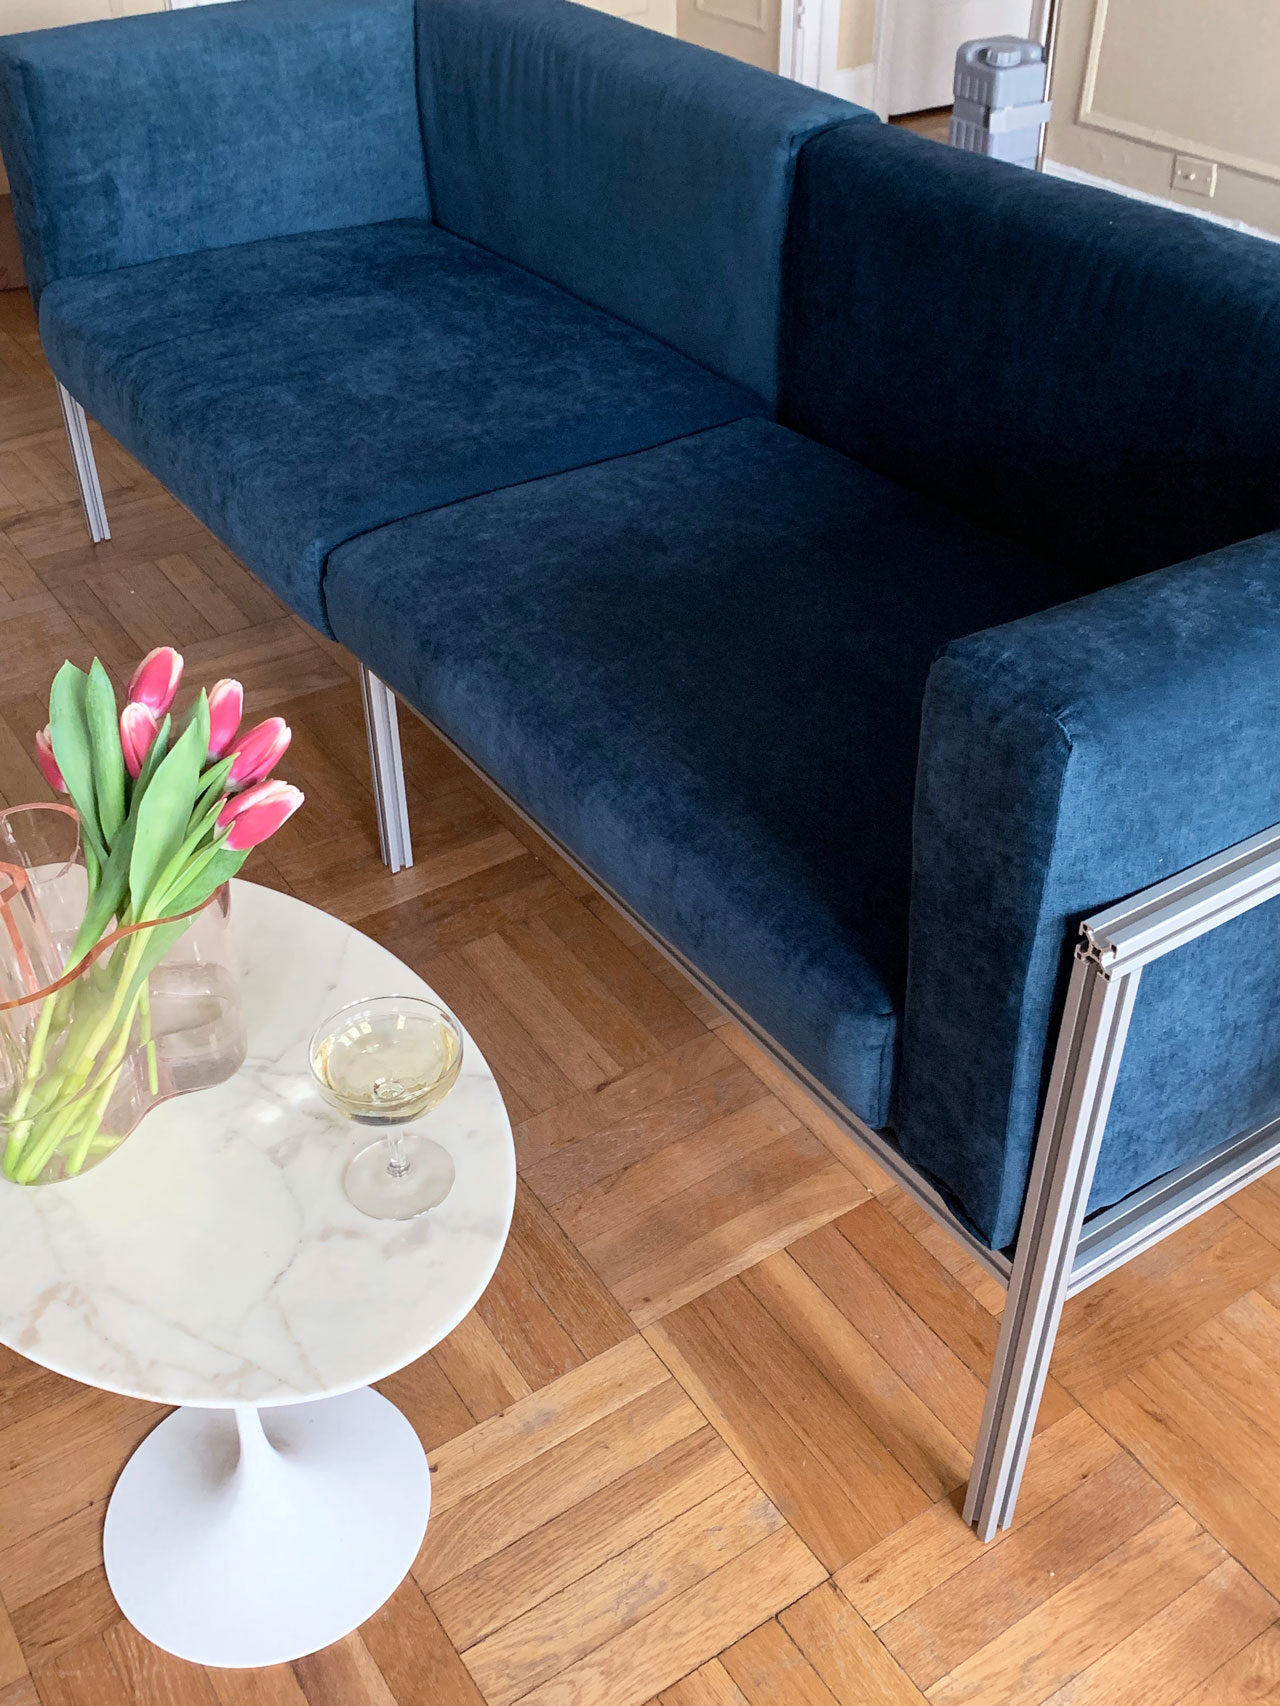 DIY velvet sofa couch designed by Aandersson